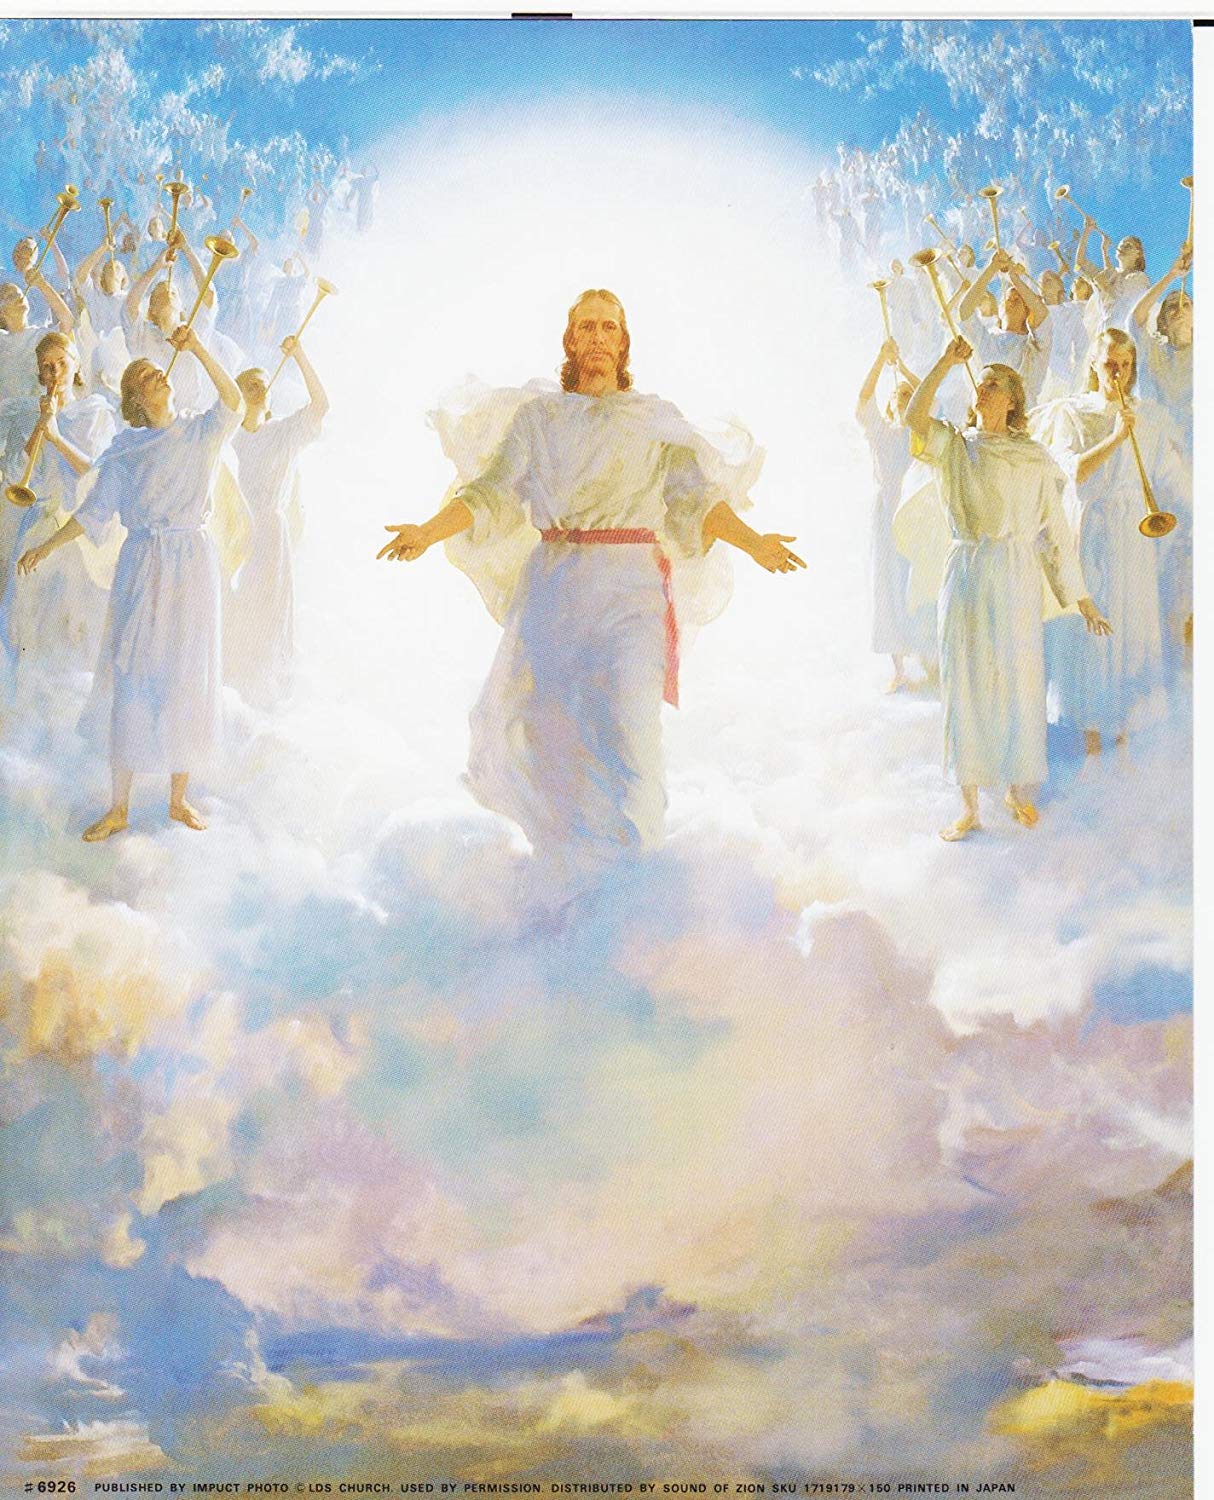 Jesus Christ (Second Coming) Religious Art Print Poster